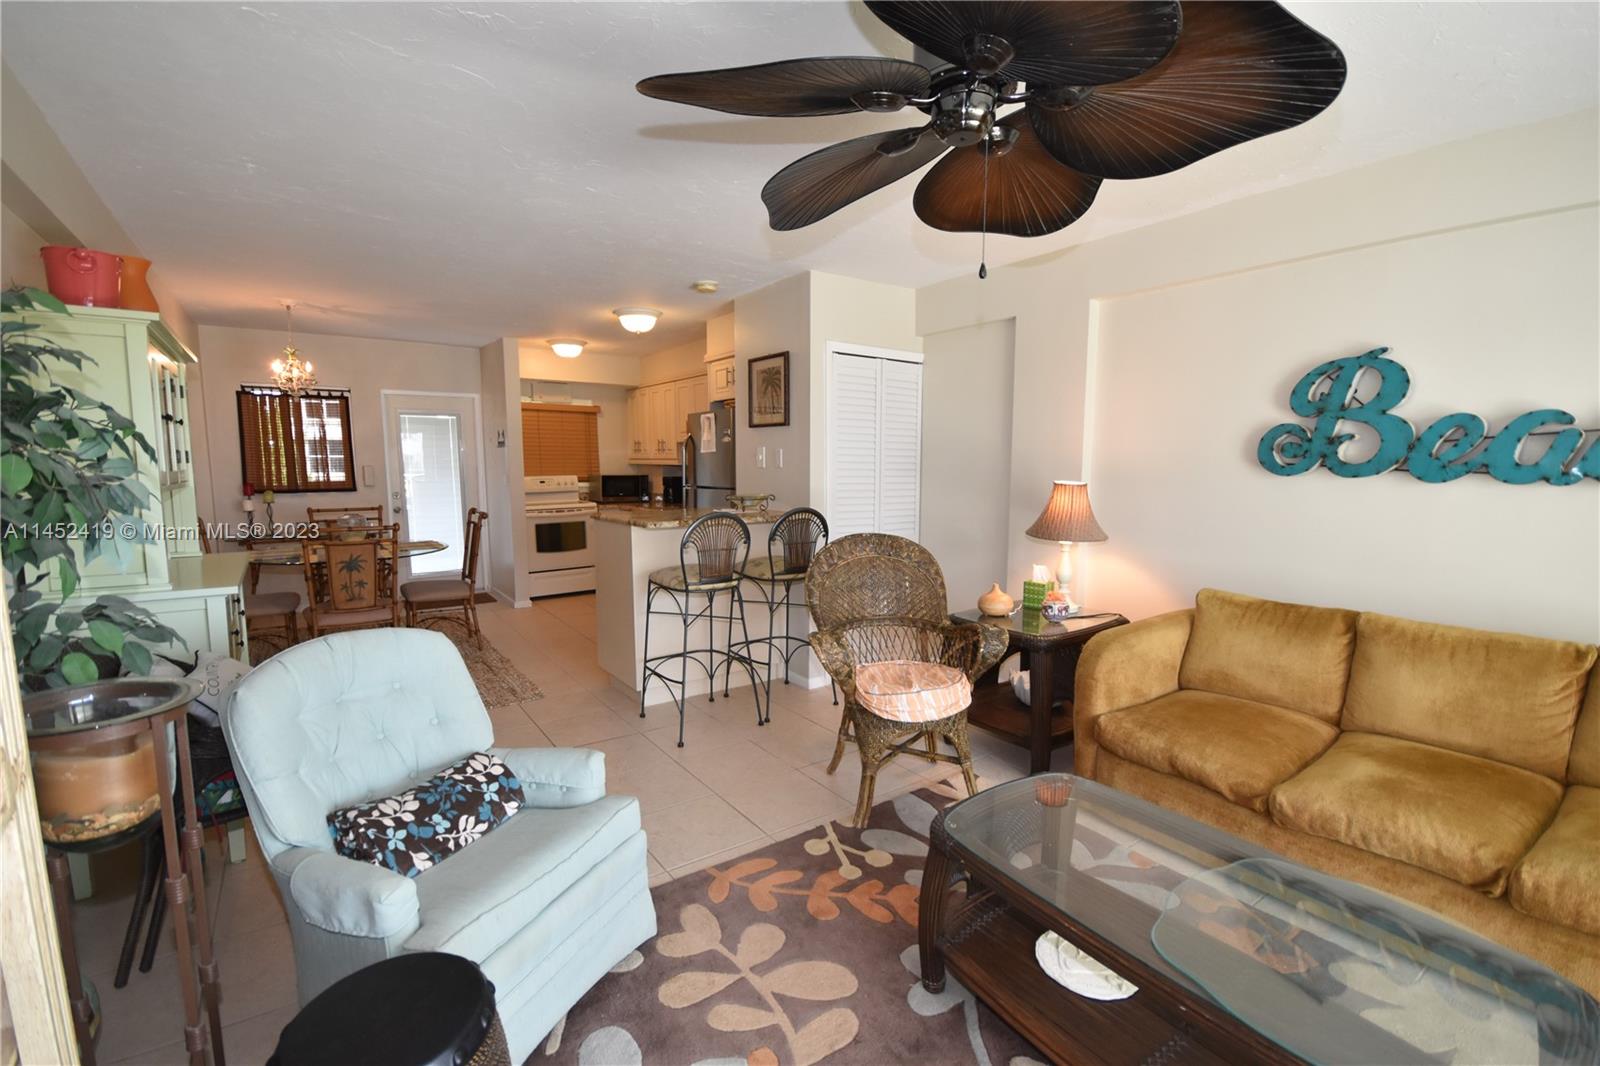 Rental Property at 33 Ocean Ave 308, Palm Beach Shores, Palm Beach County, Florida - Bedrooms: 1 
Bathrooms: 1  - $3,500 MO.